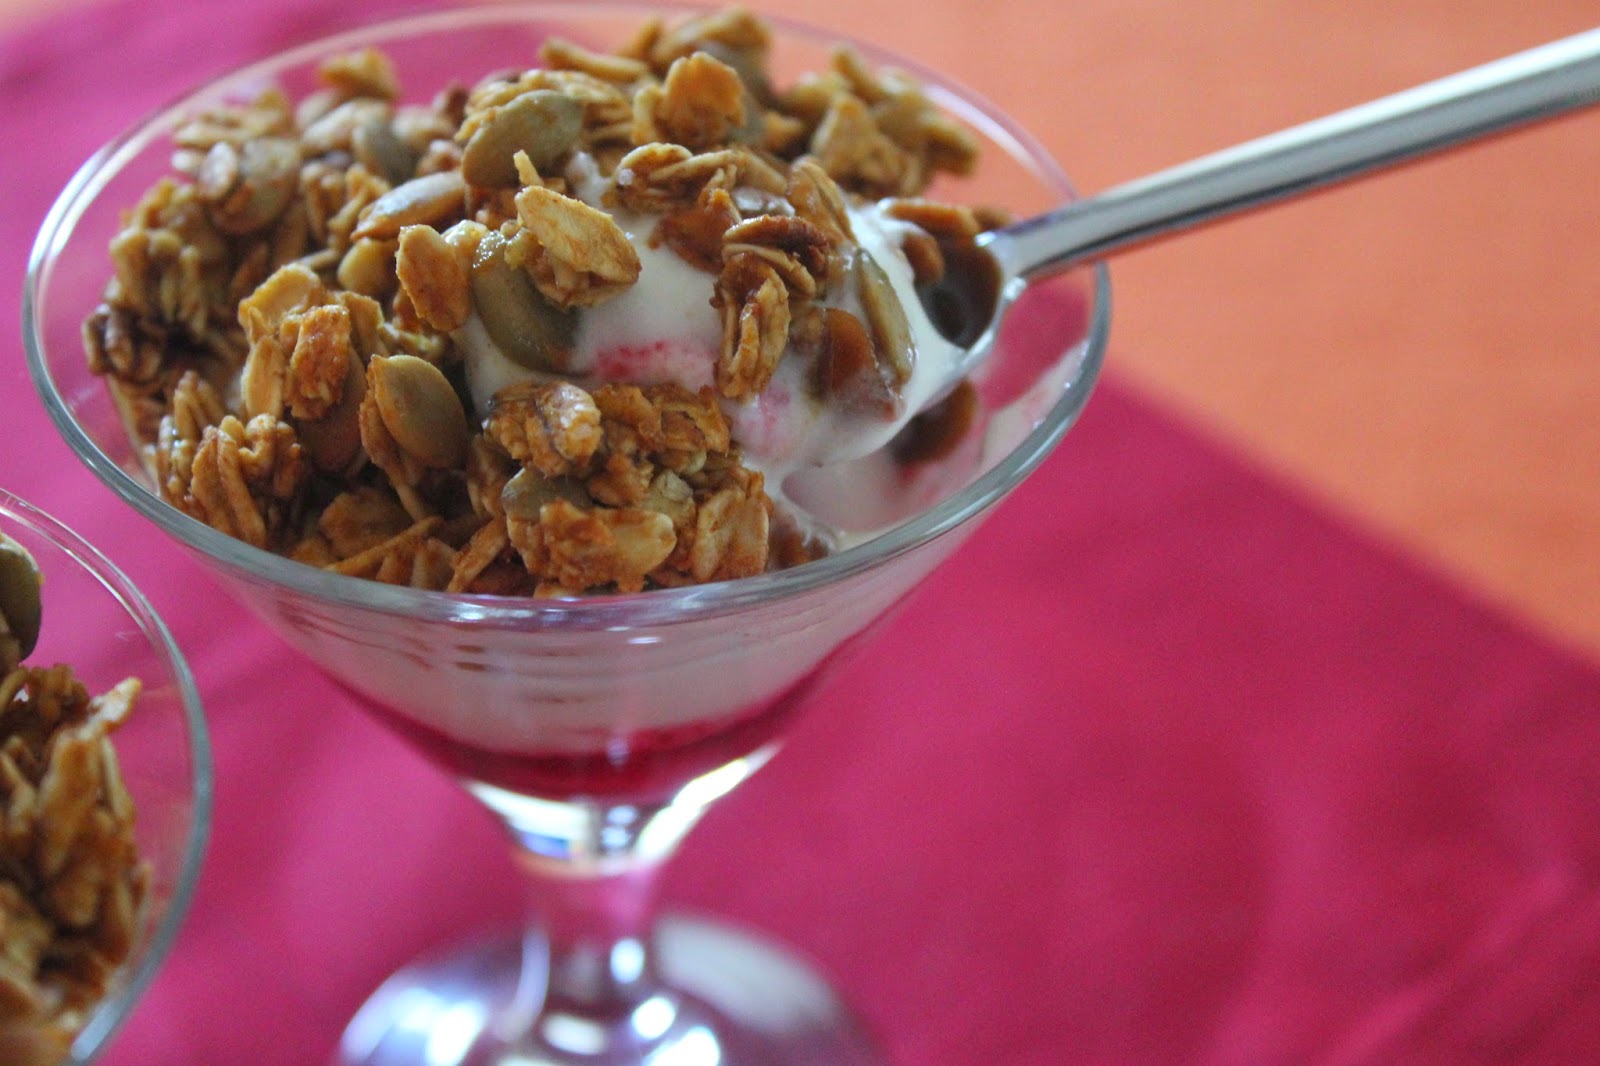 Pumpkin-cranberry yogurt parfaits from Delicious Dishings